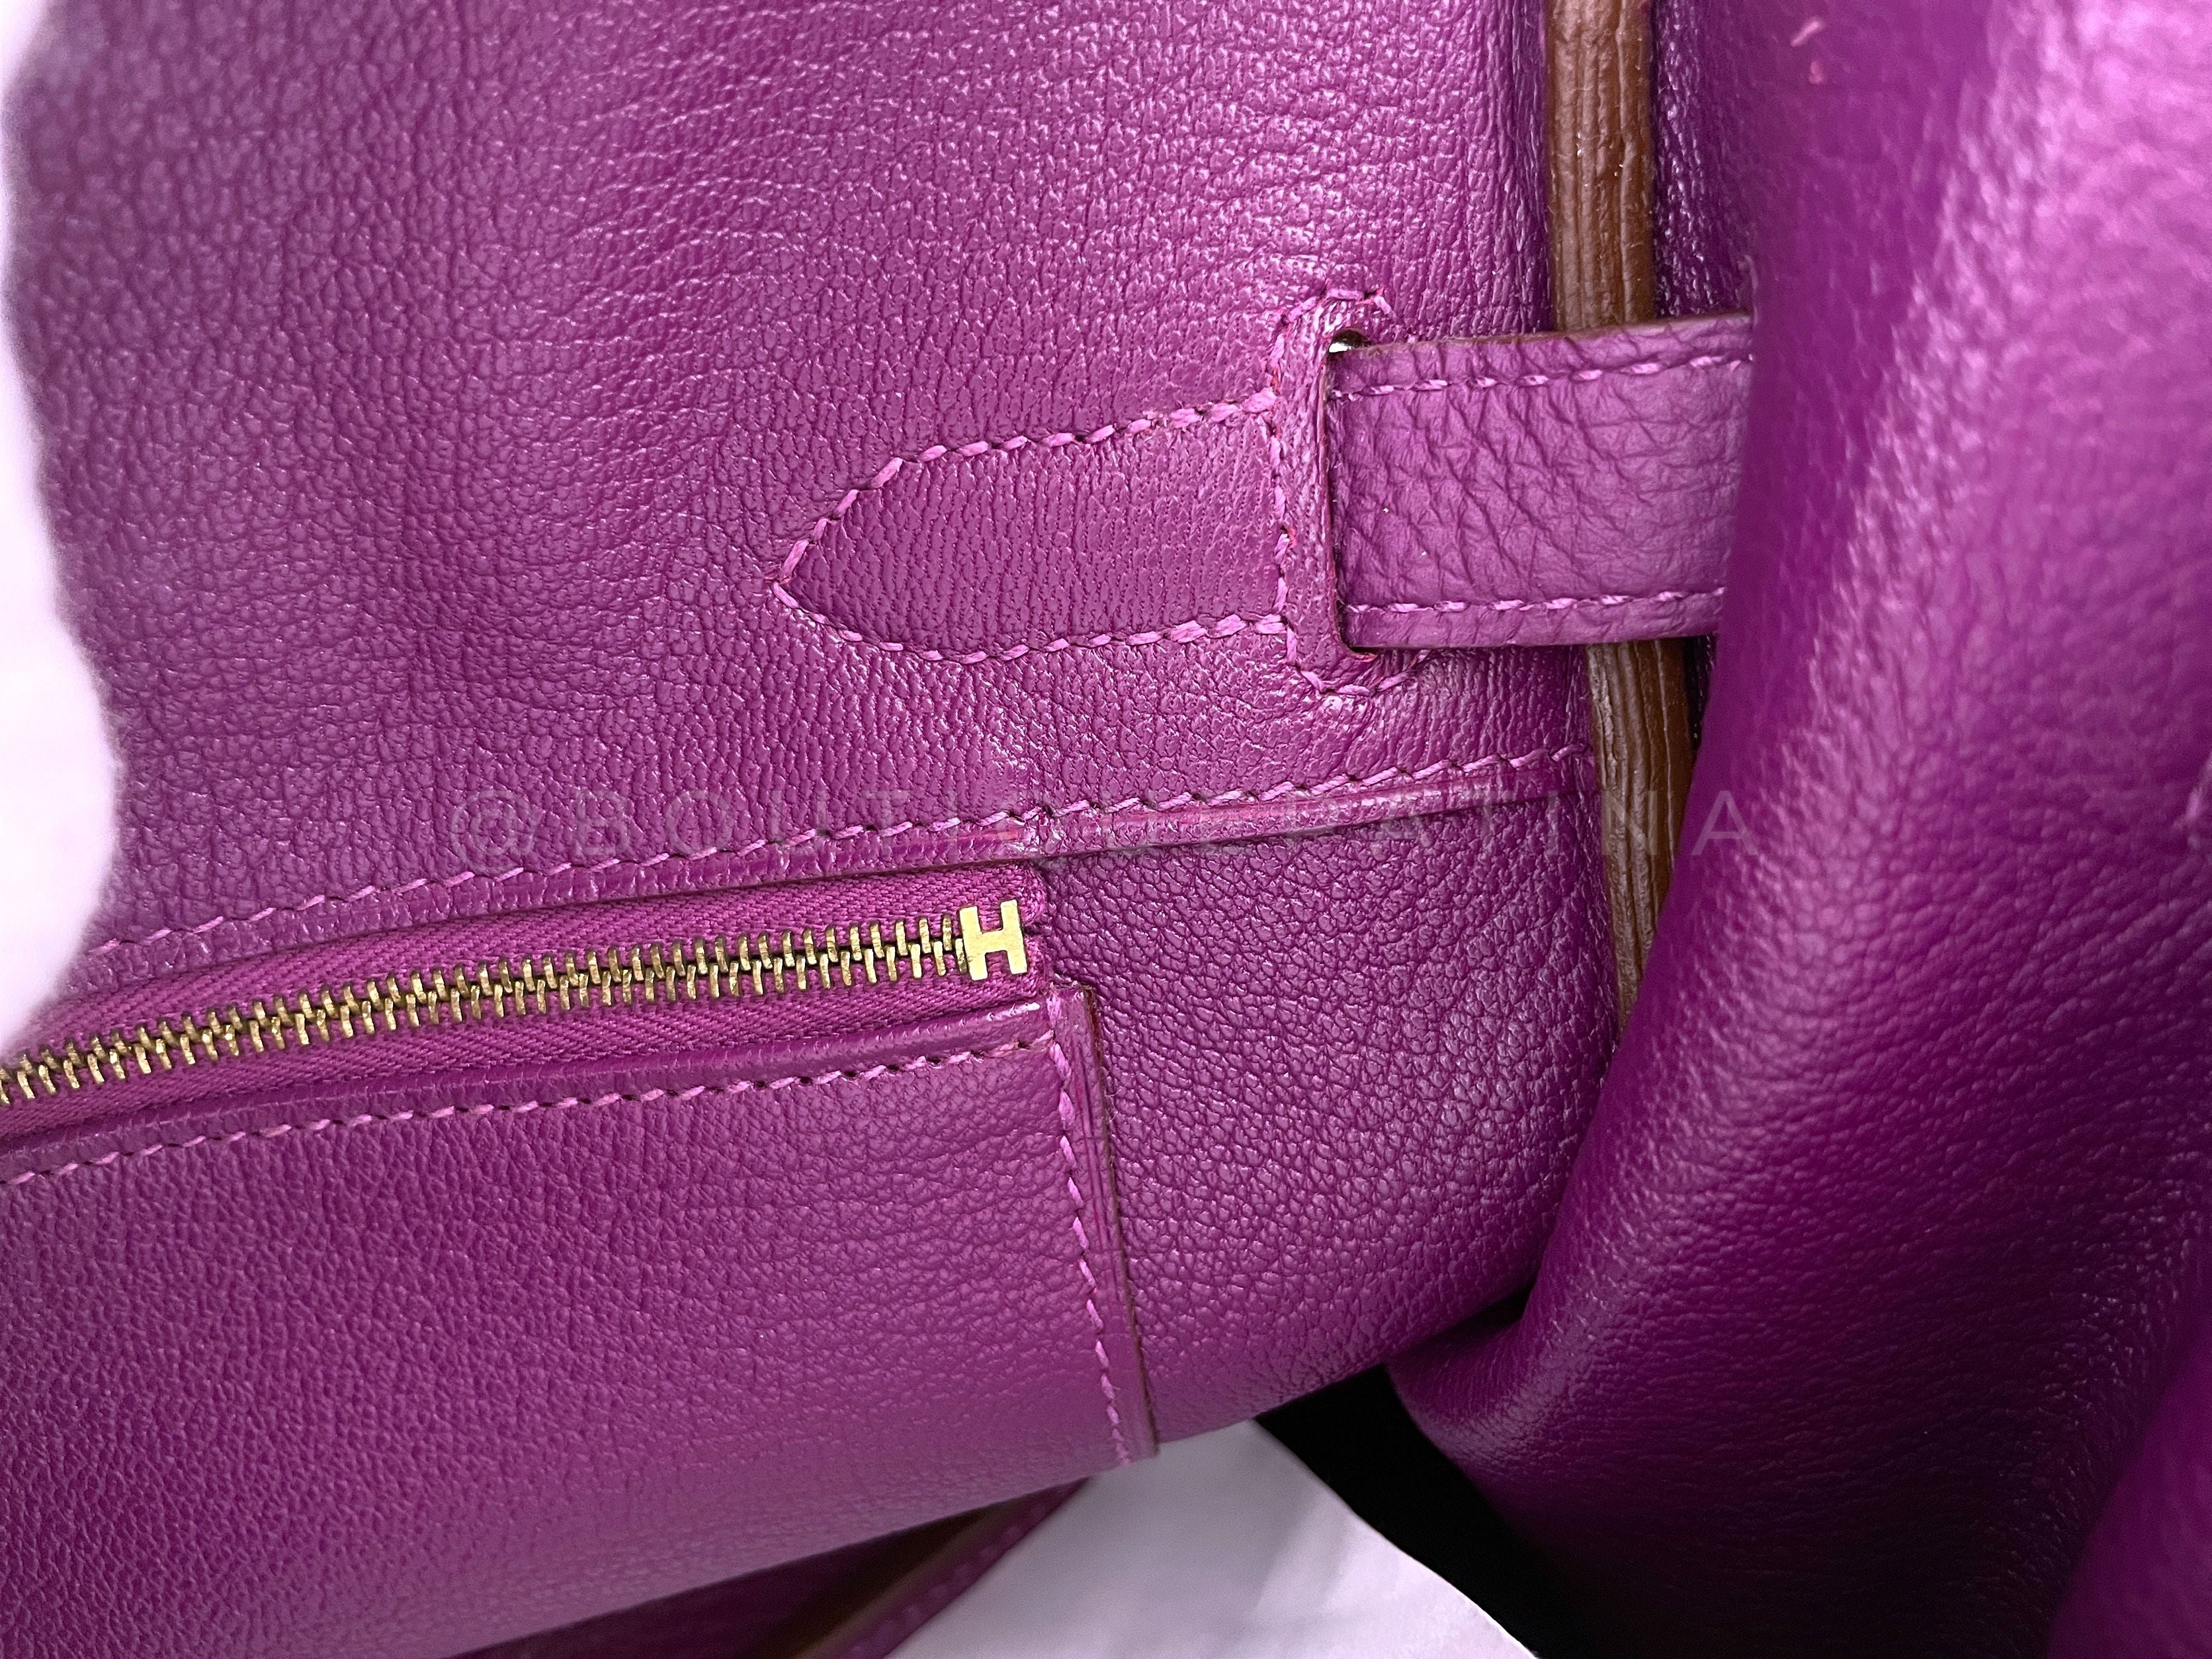 Hermes 30cm Anemone Purple Togo Birkin Tote Bag 24k GHW